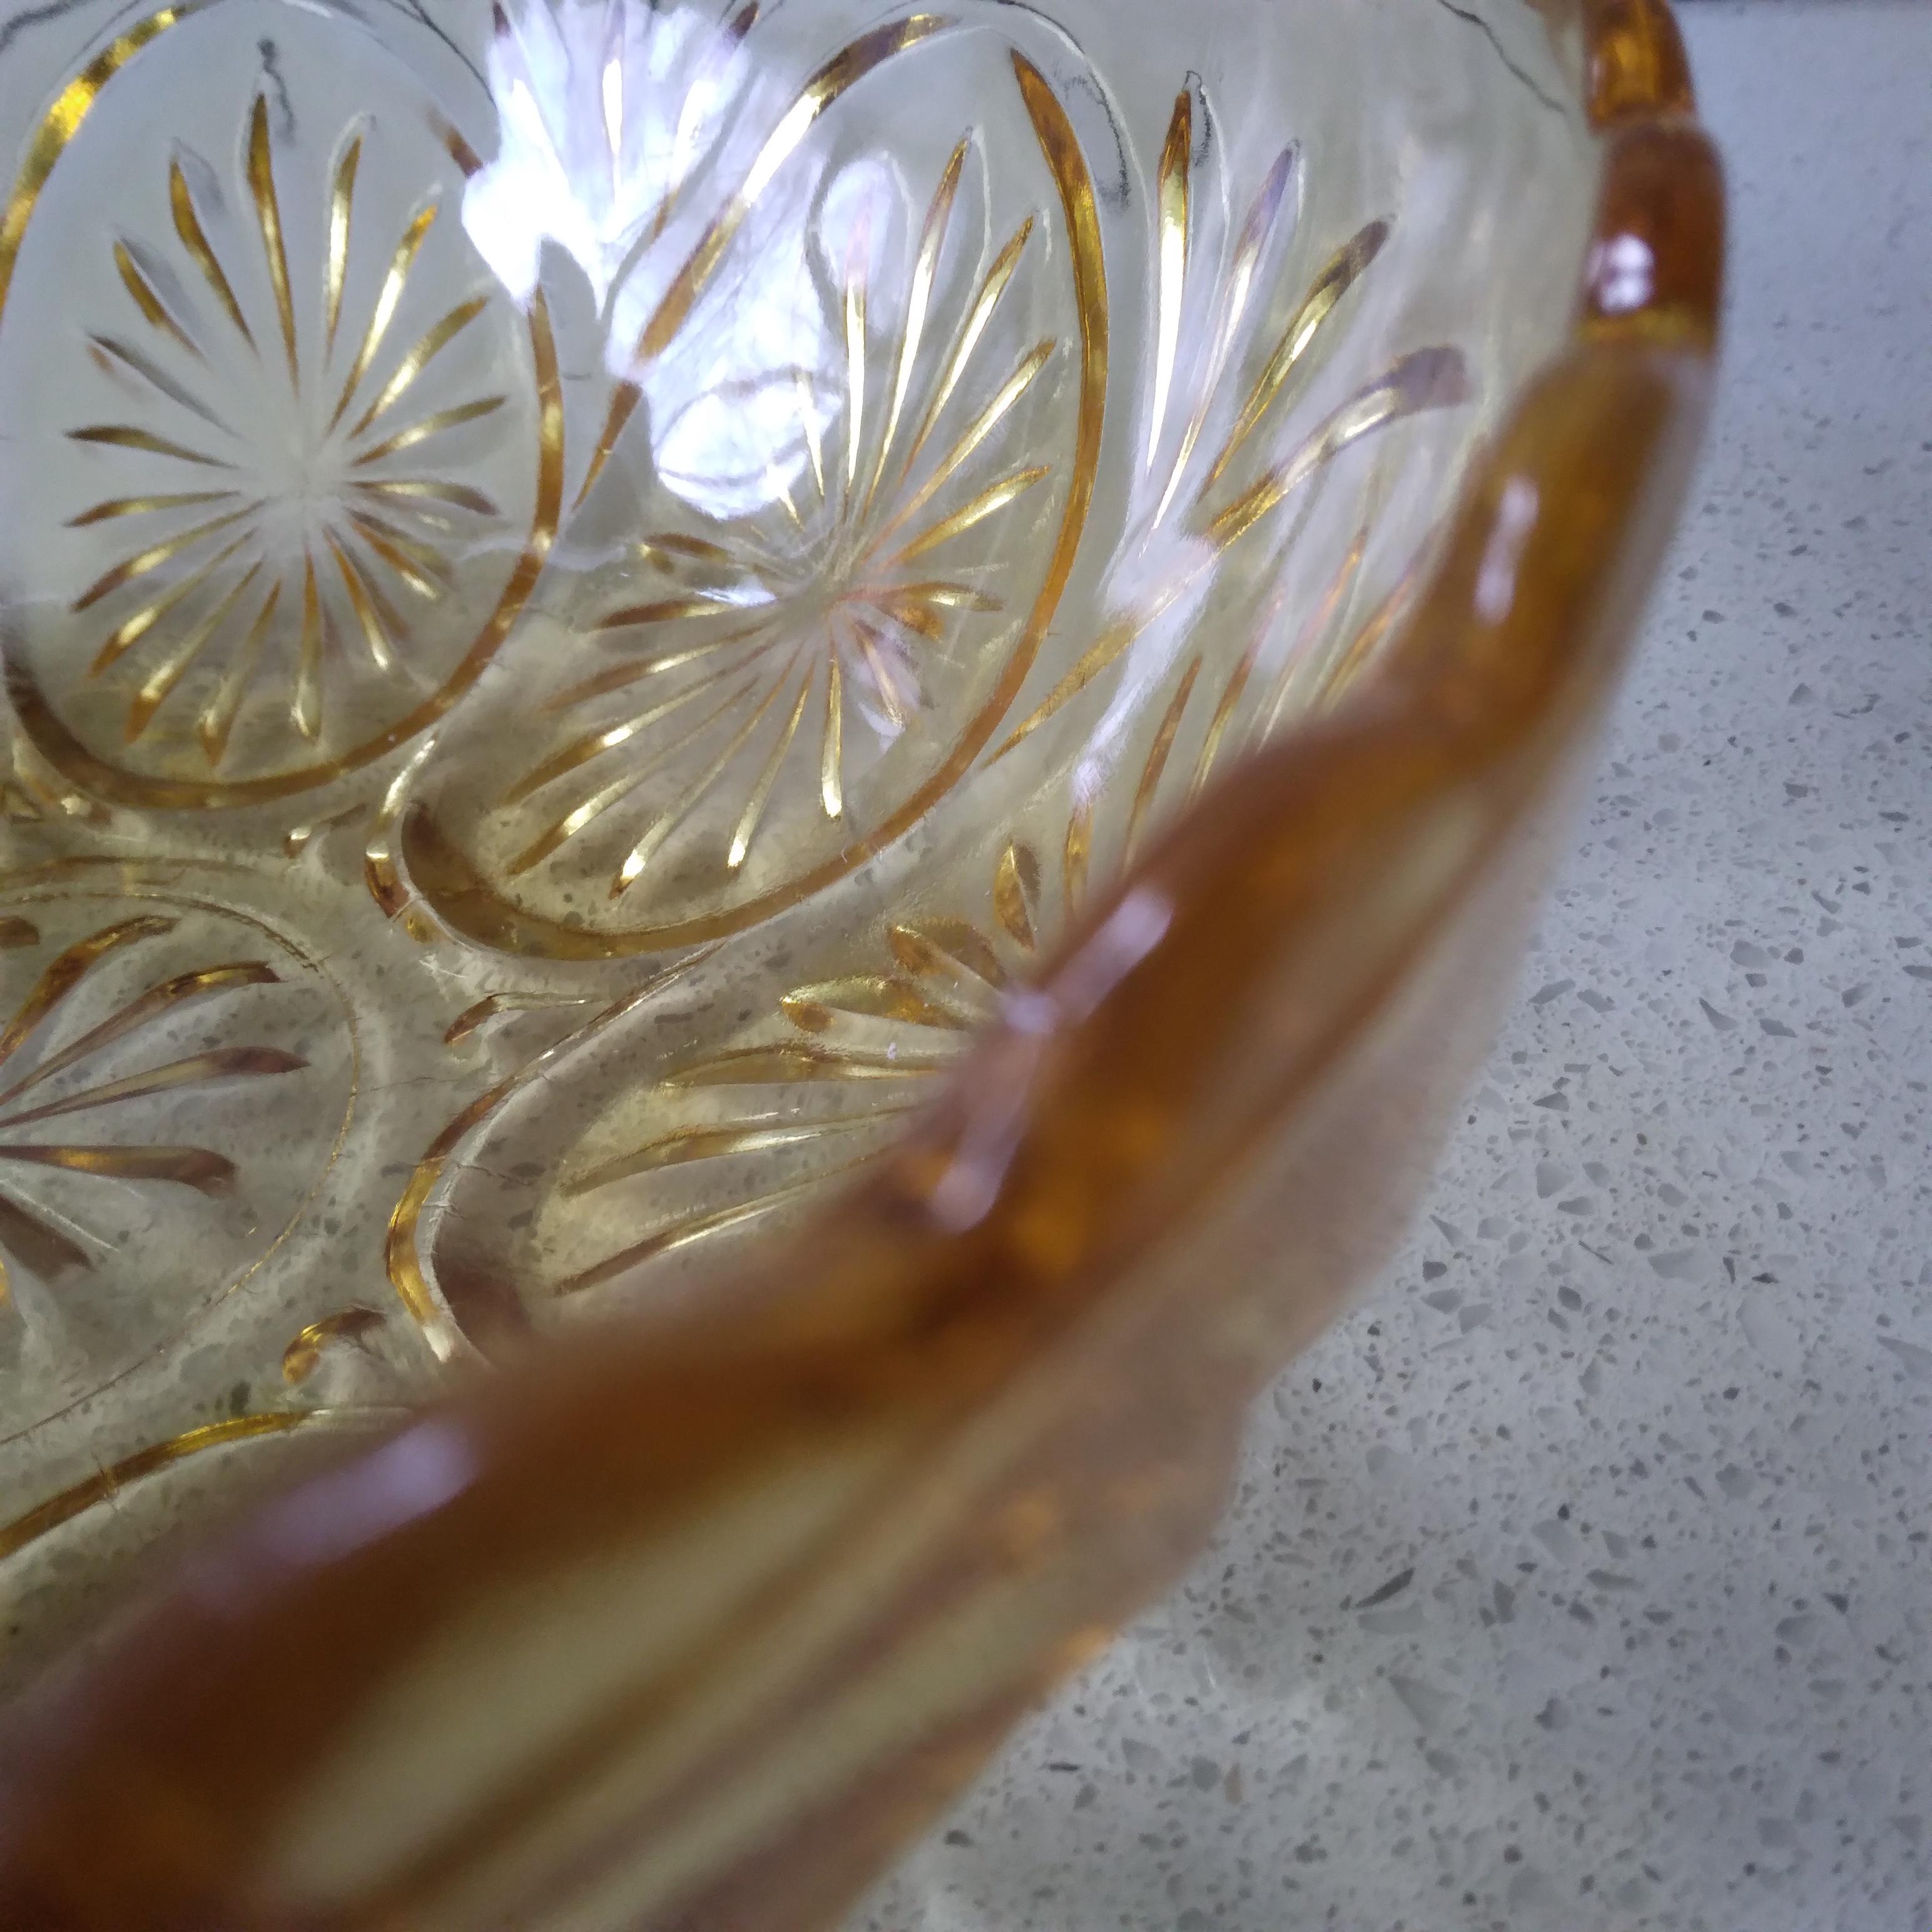 vintage amber glass bowl